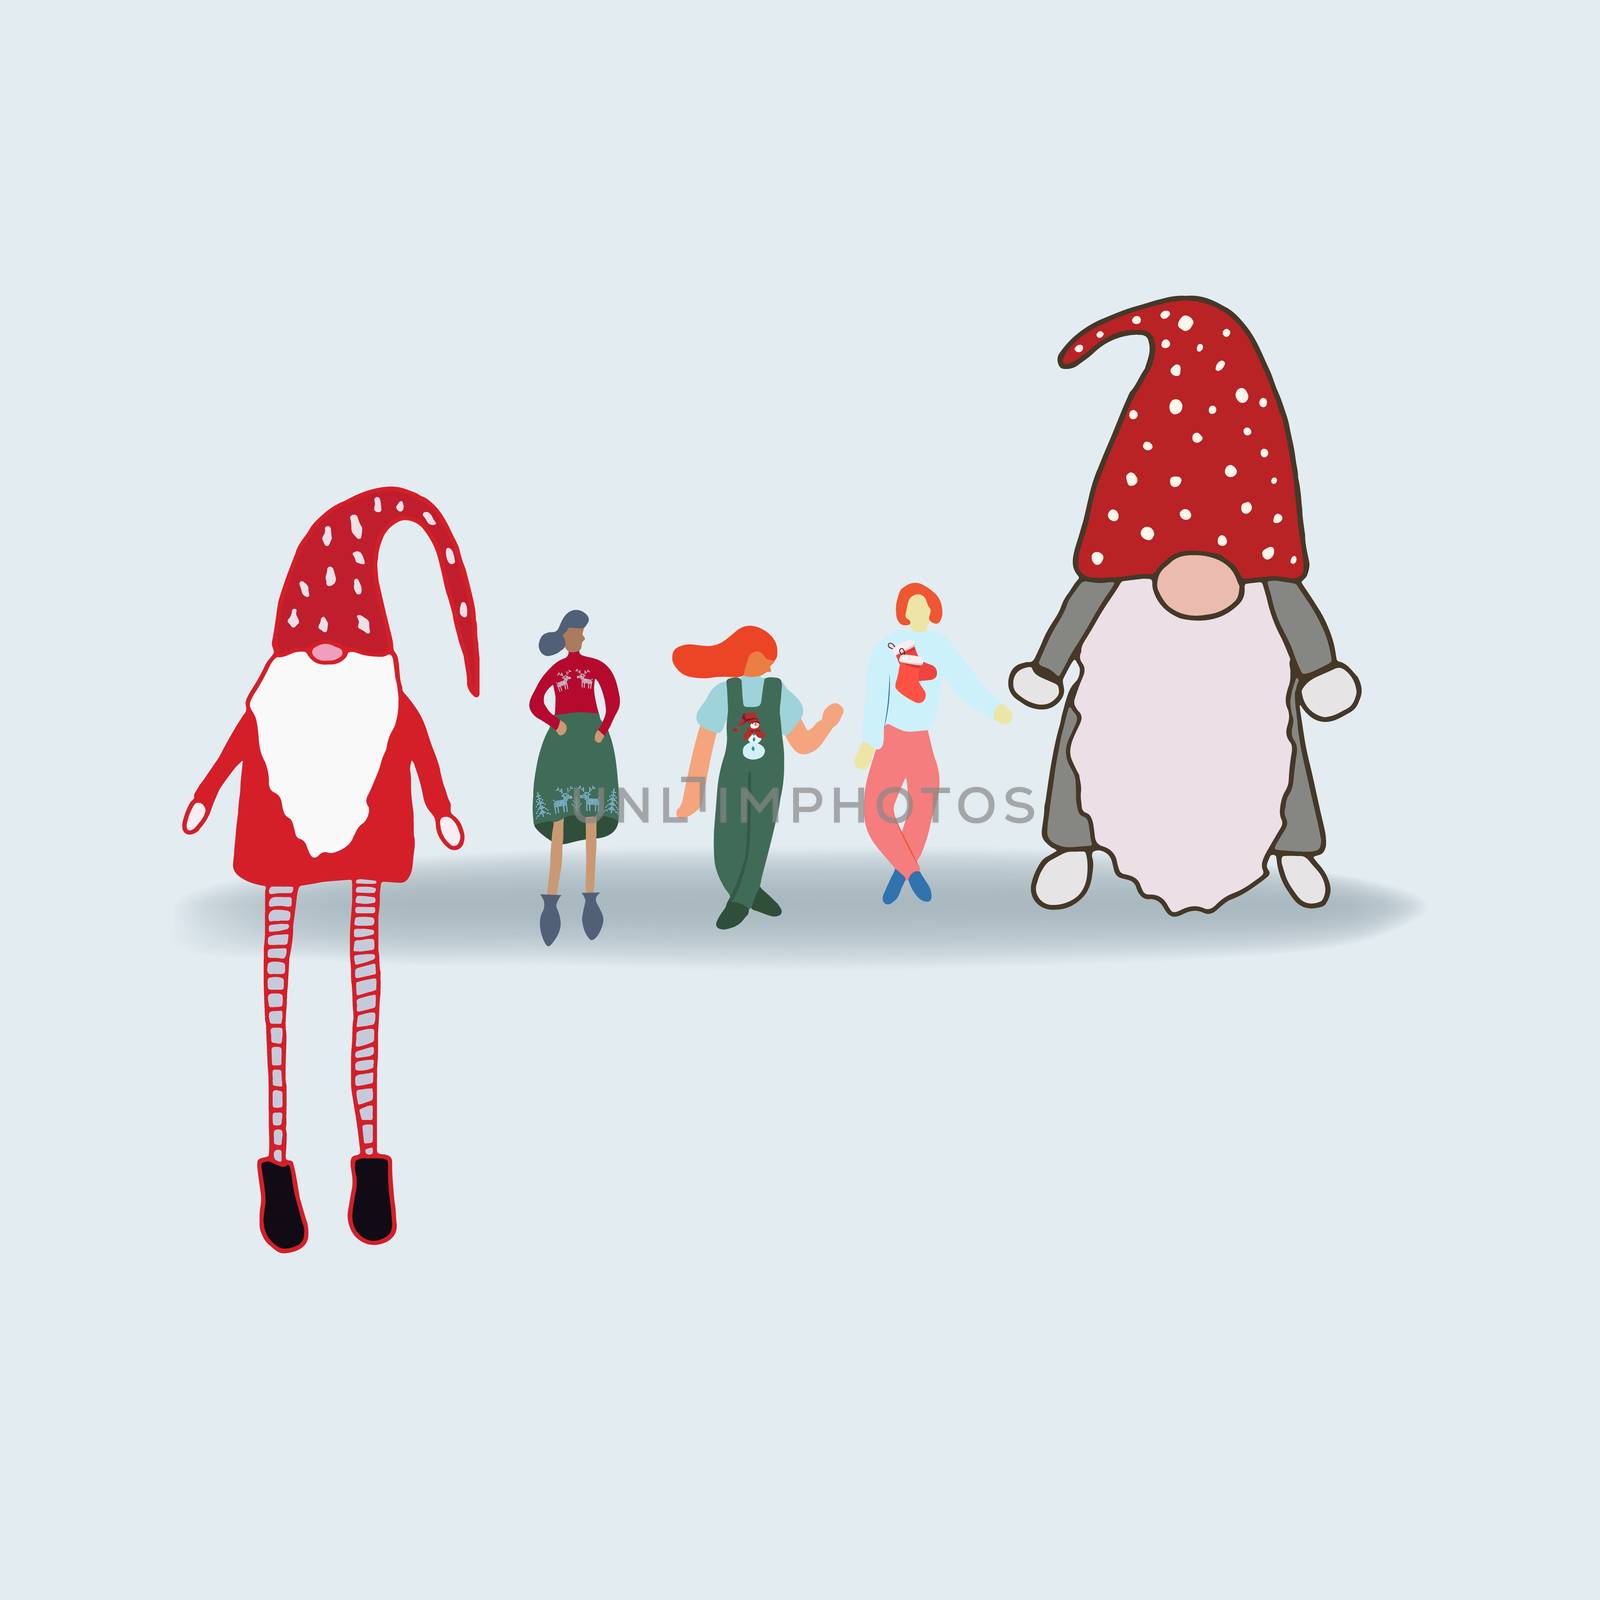 Scandinavian gnomes celebrating Christmas with people. by Nata_Prando